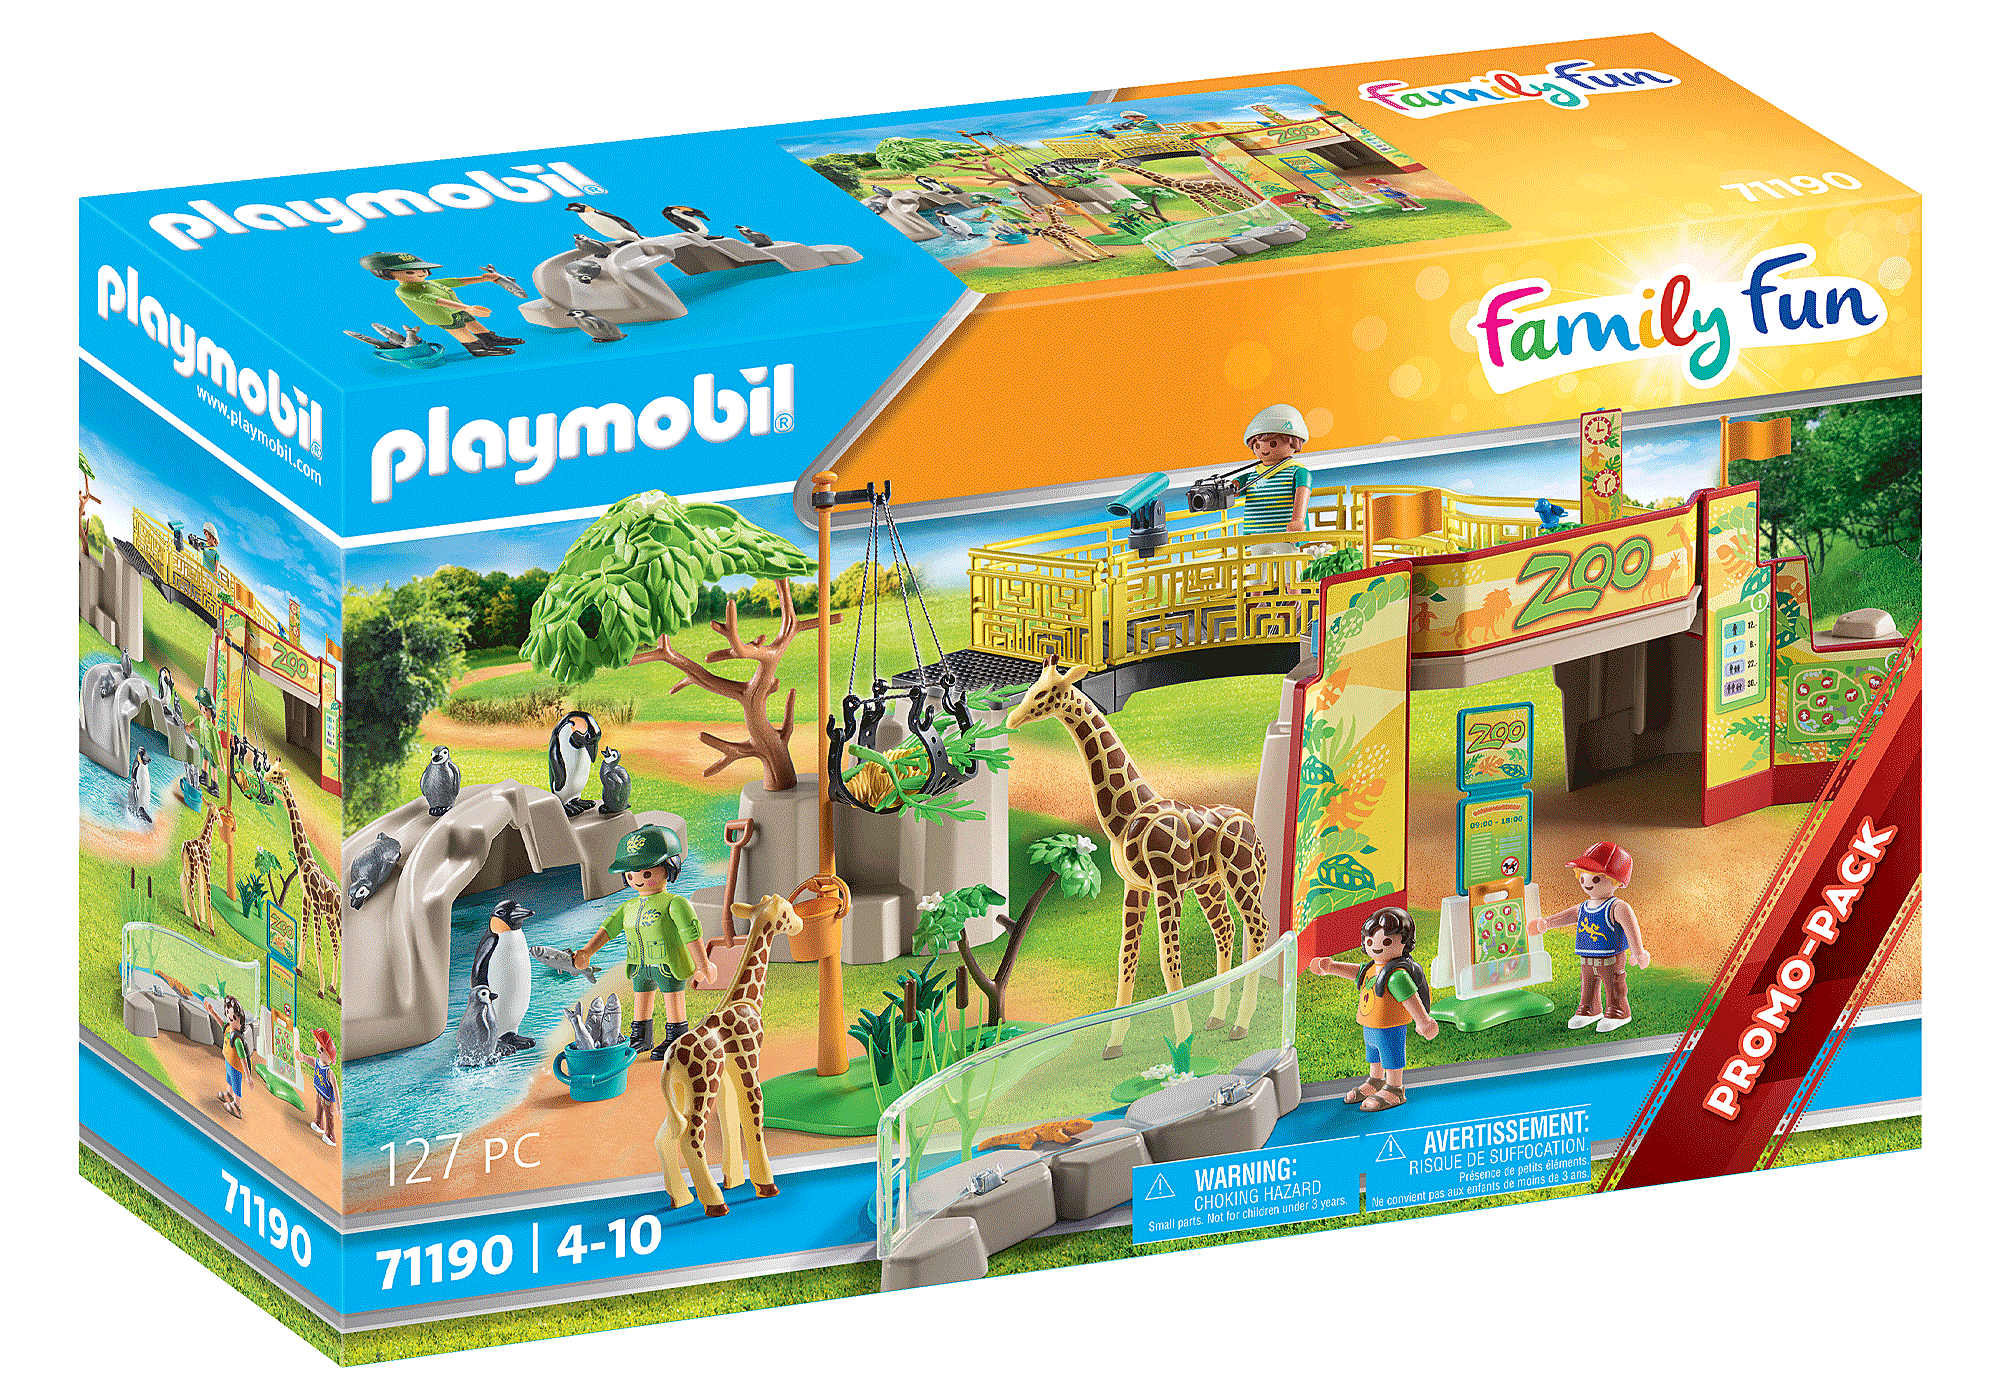  Playmobil Petting Zoo : Playmobil: Toys & Games